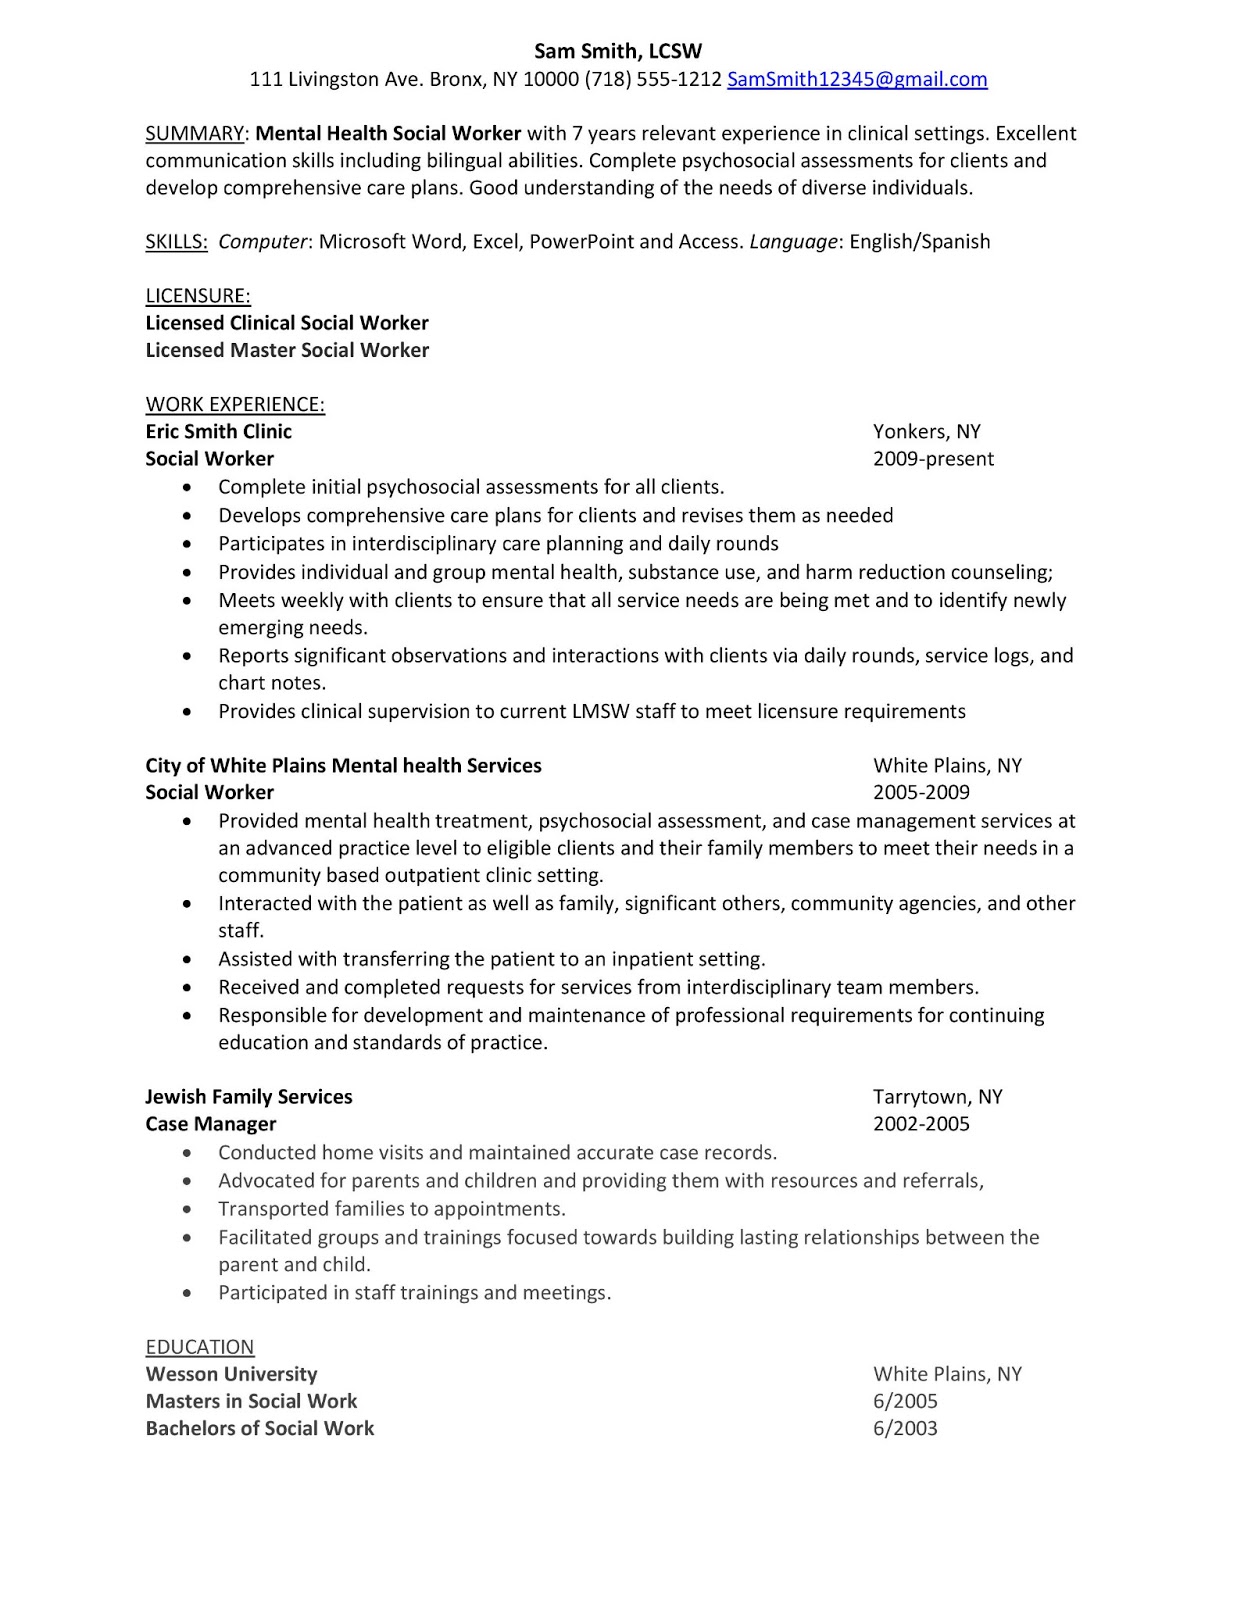 Dietary aide job description for resume